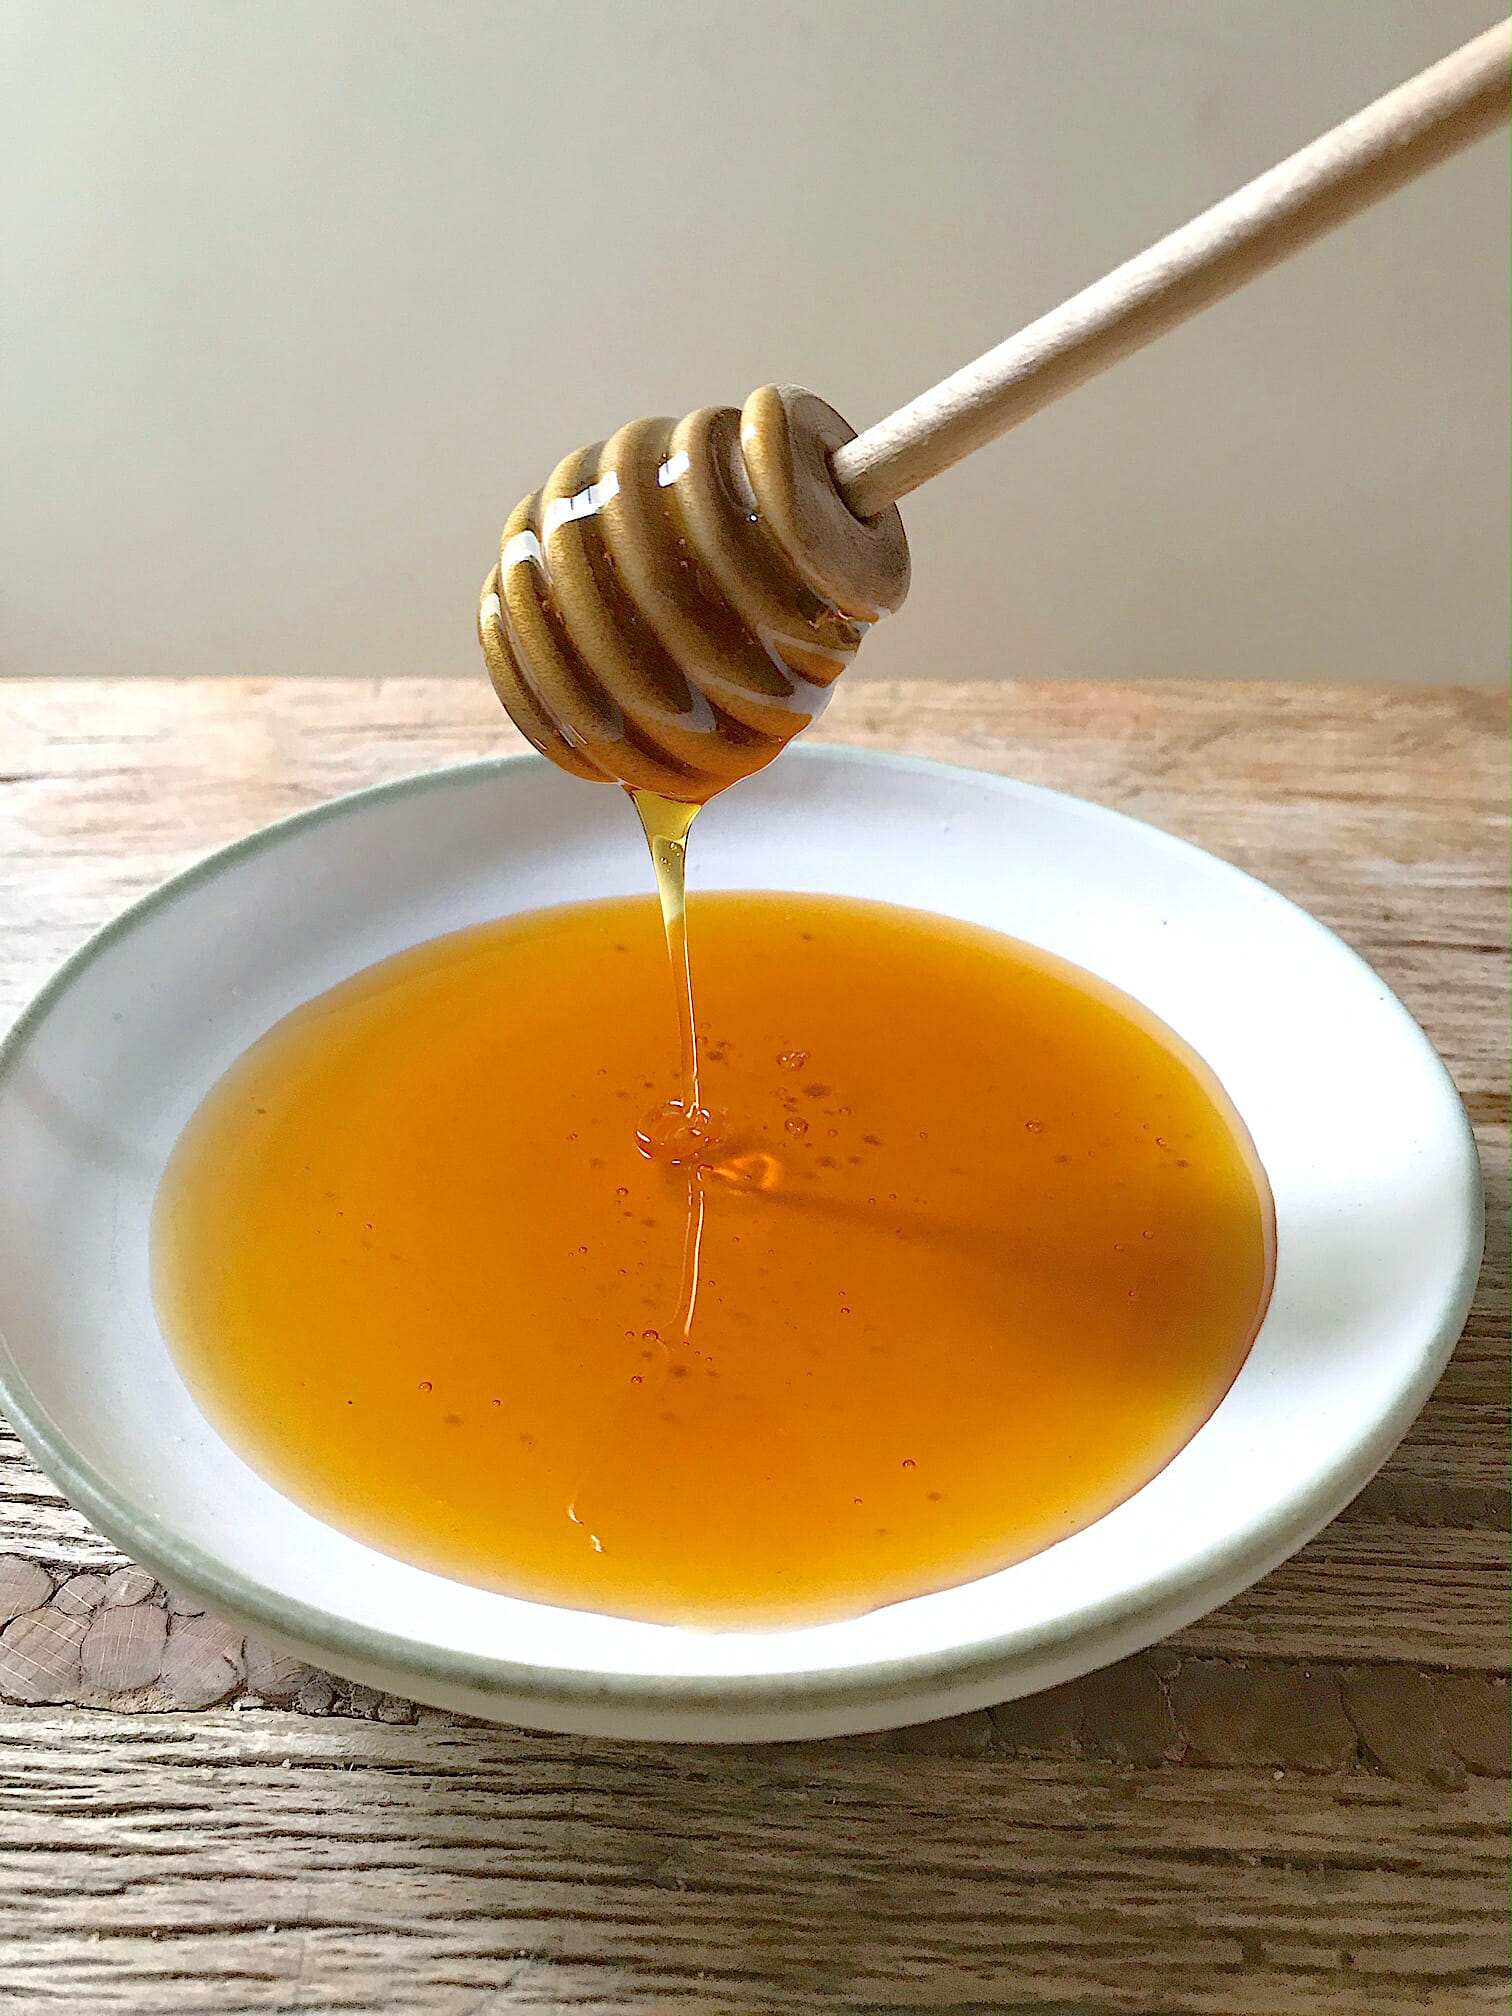 Is Honey Healthy?